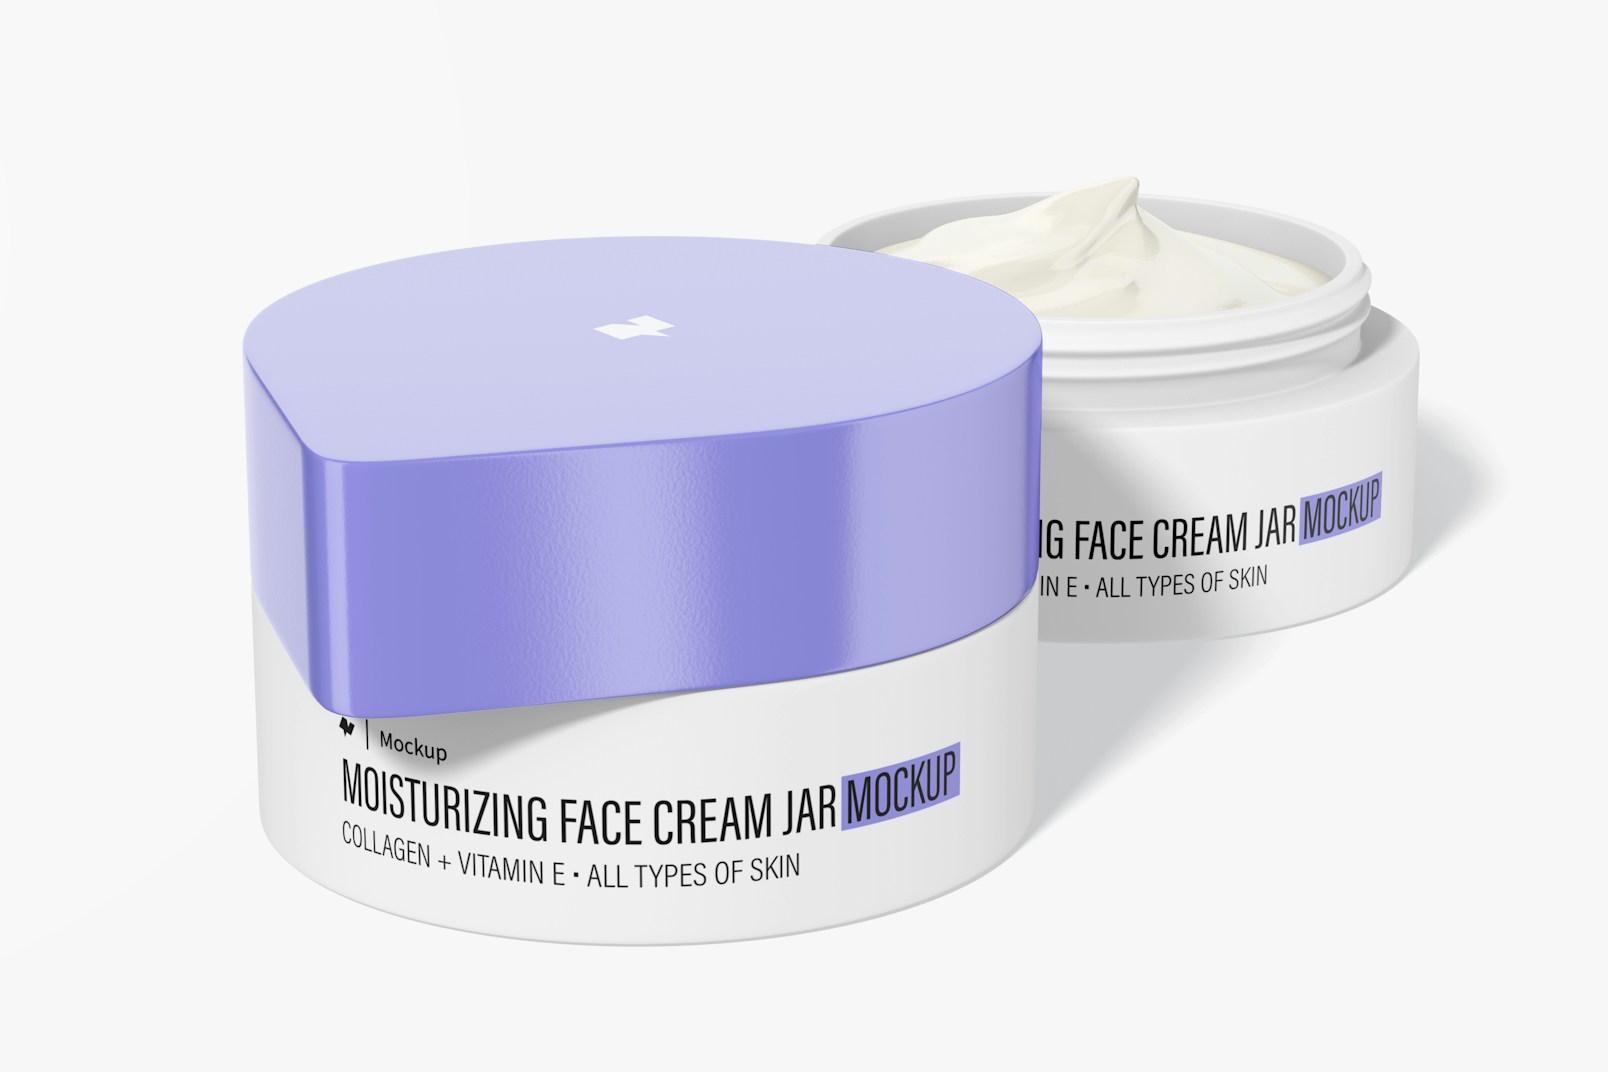 Moisturizing Face Cream Jars Mockup, Closed and Opened